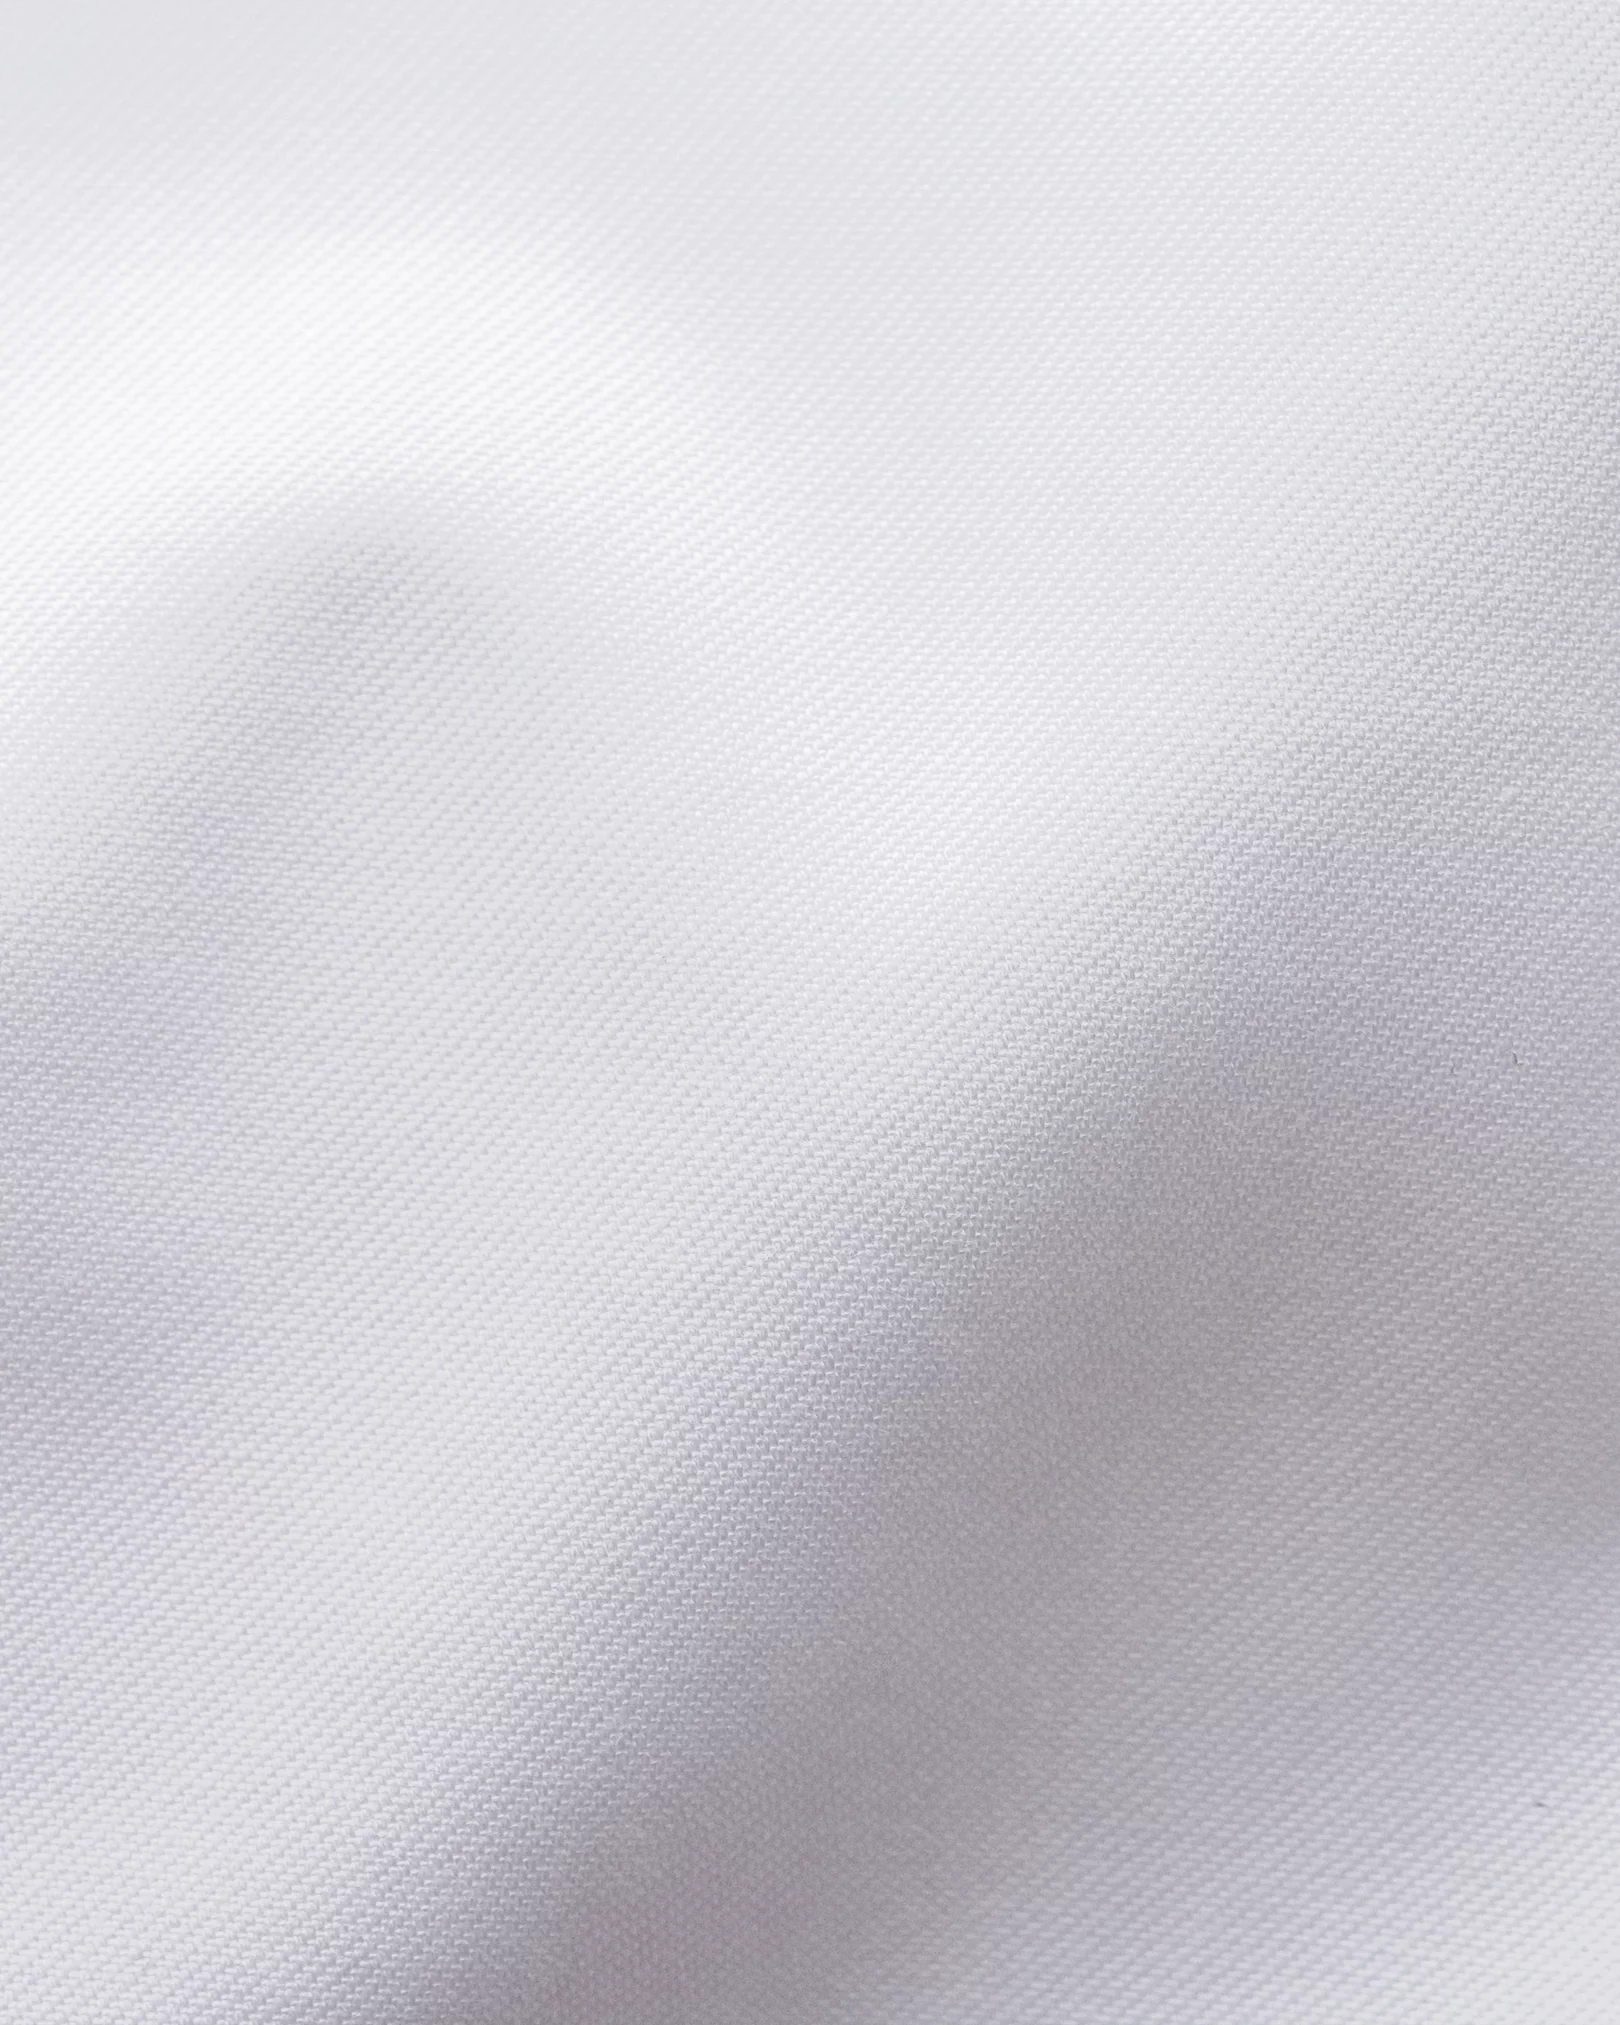 White Signature Twill Shirt - Eton